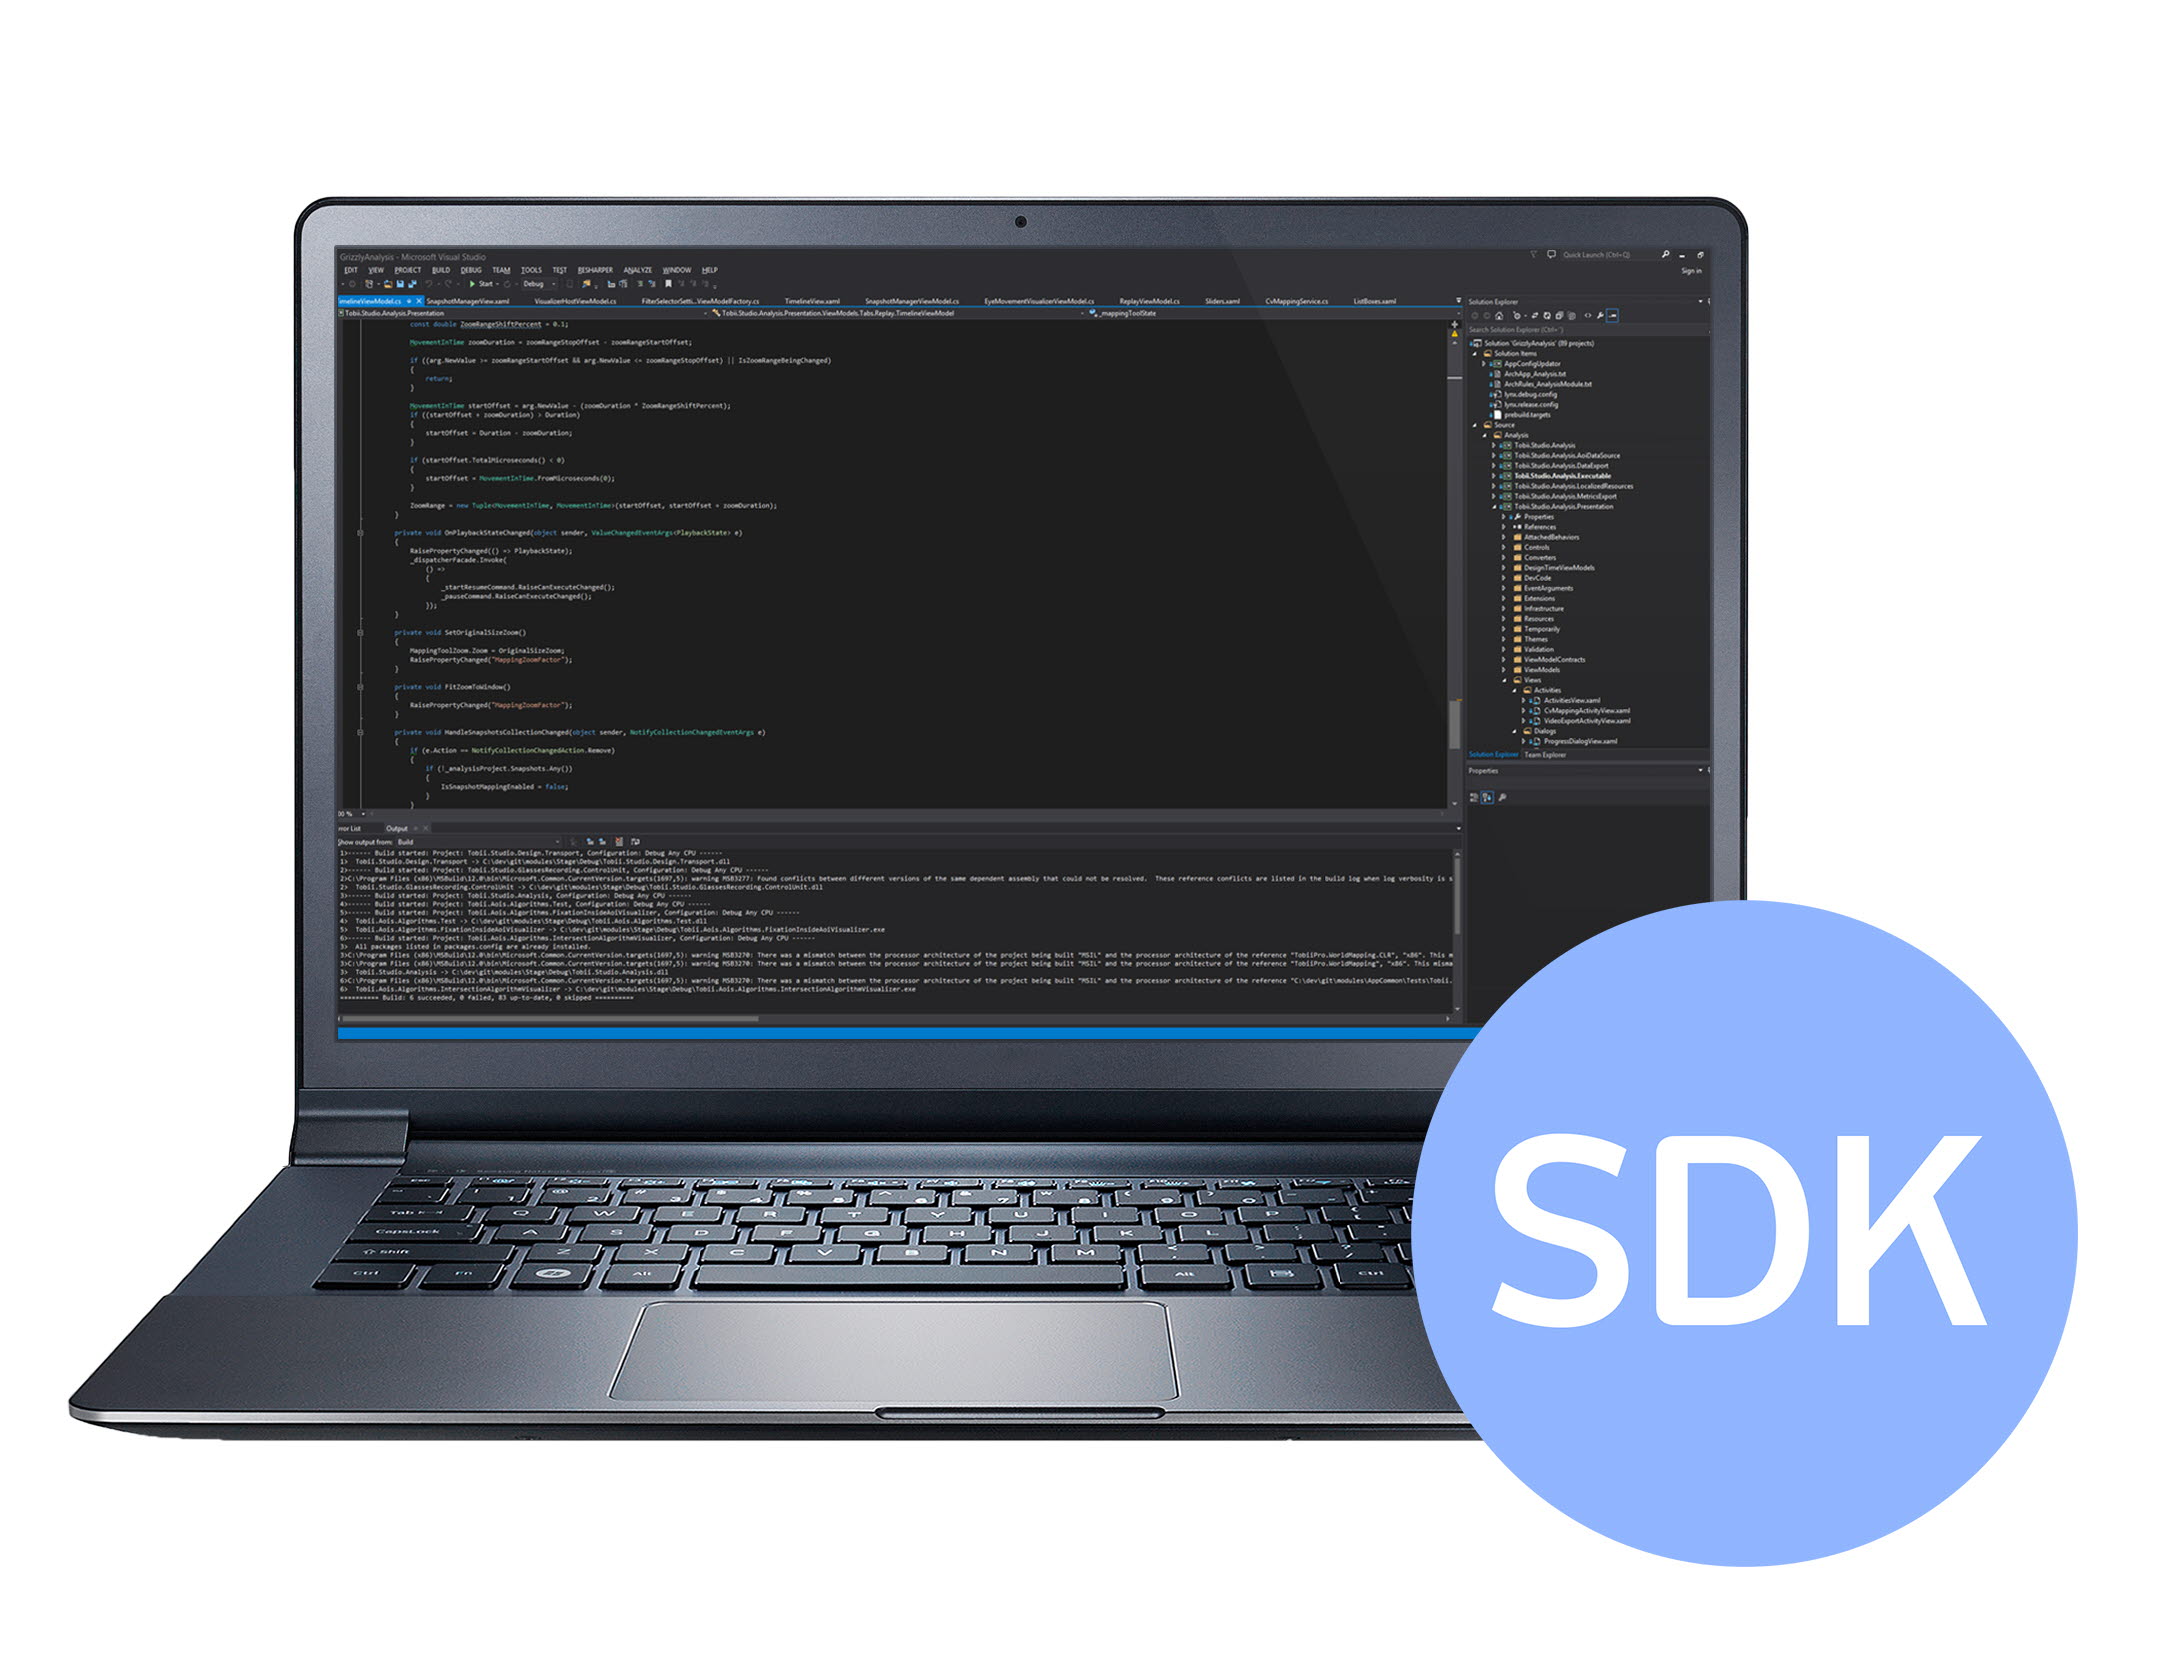 Tobii Pro SDK software